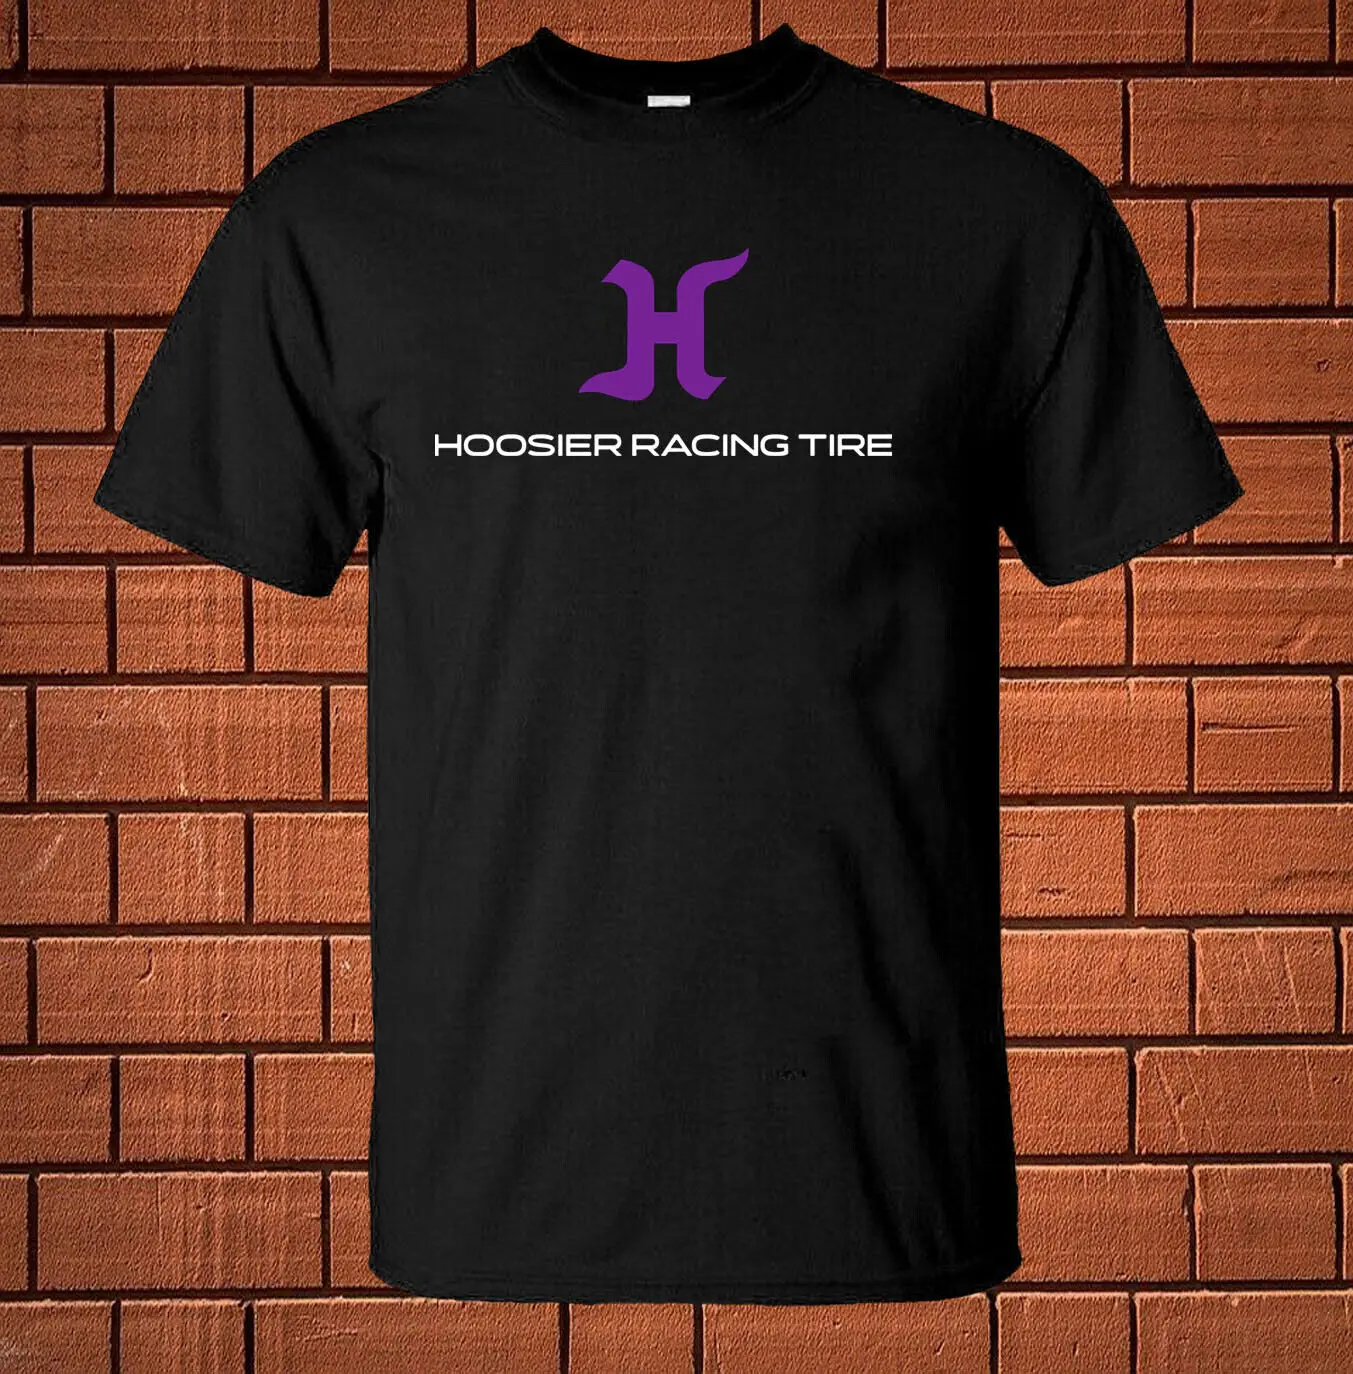 Новая футболка с логотипом Hoosier Racing Tire